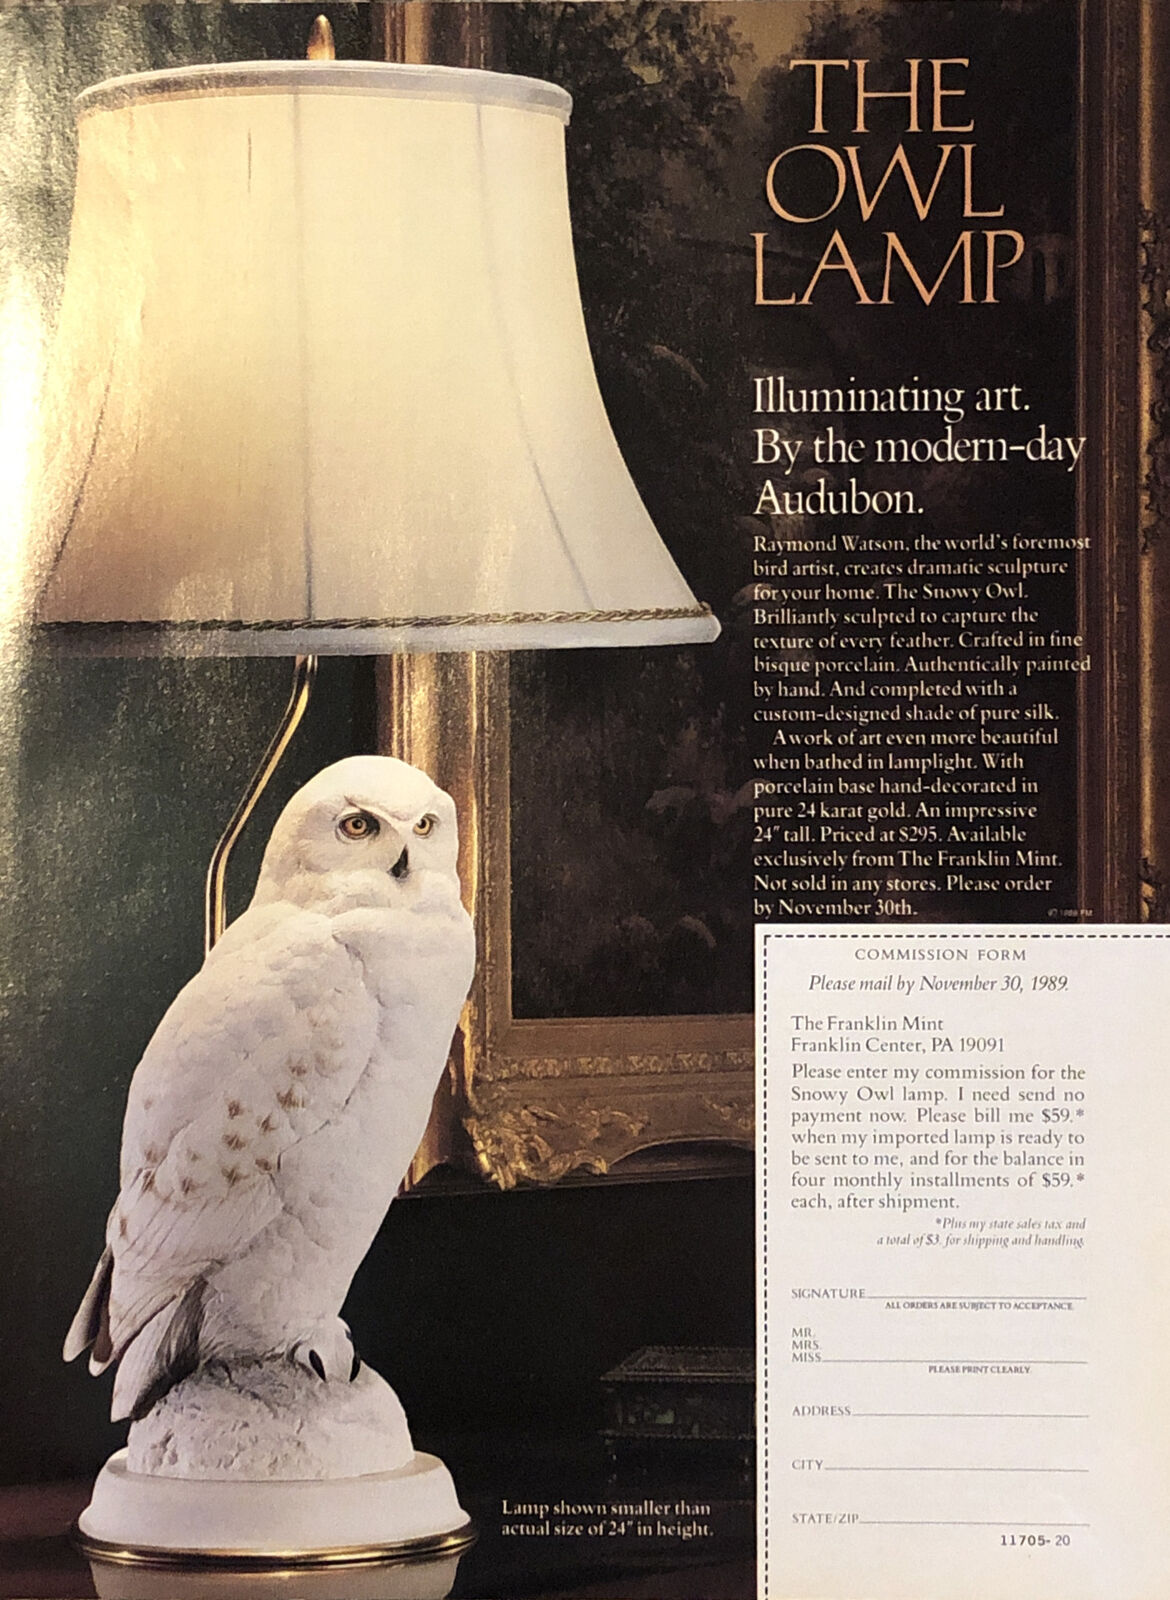 1989 Franklin Mint Owl Lamp VTG 1980s PRINT AD Illuminating Audubon Advertising